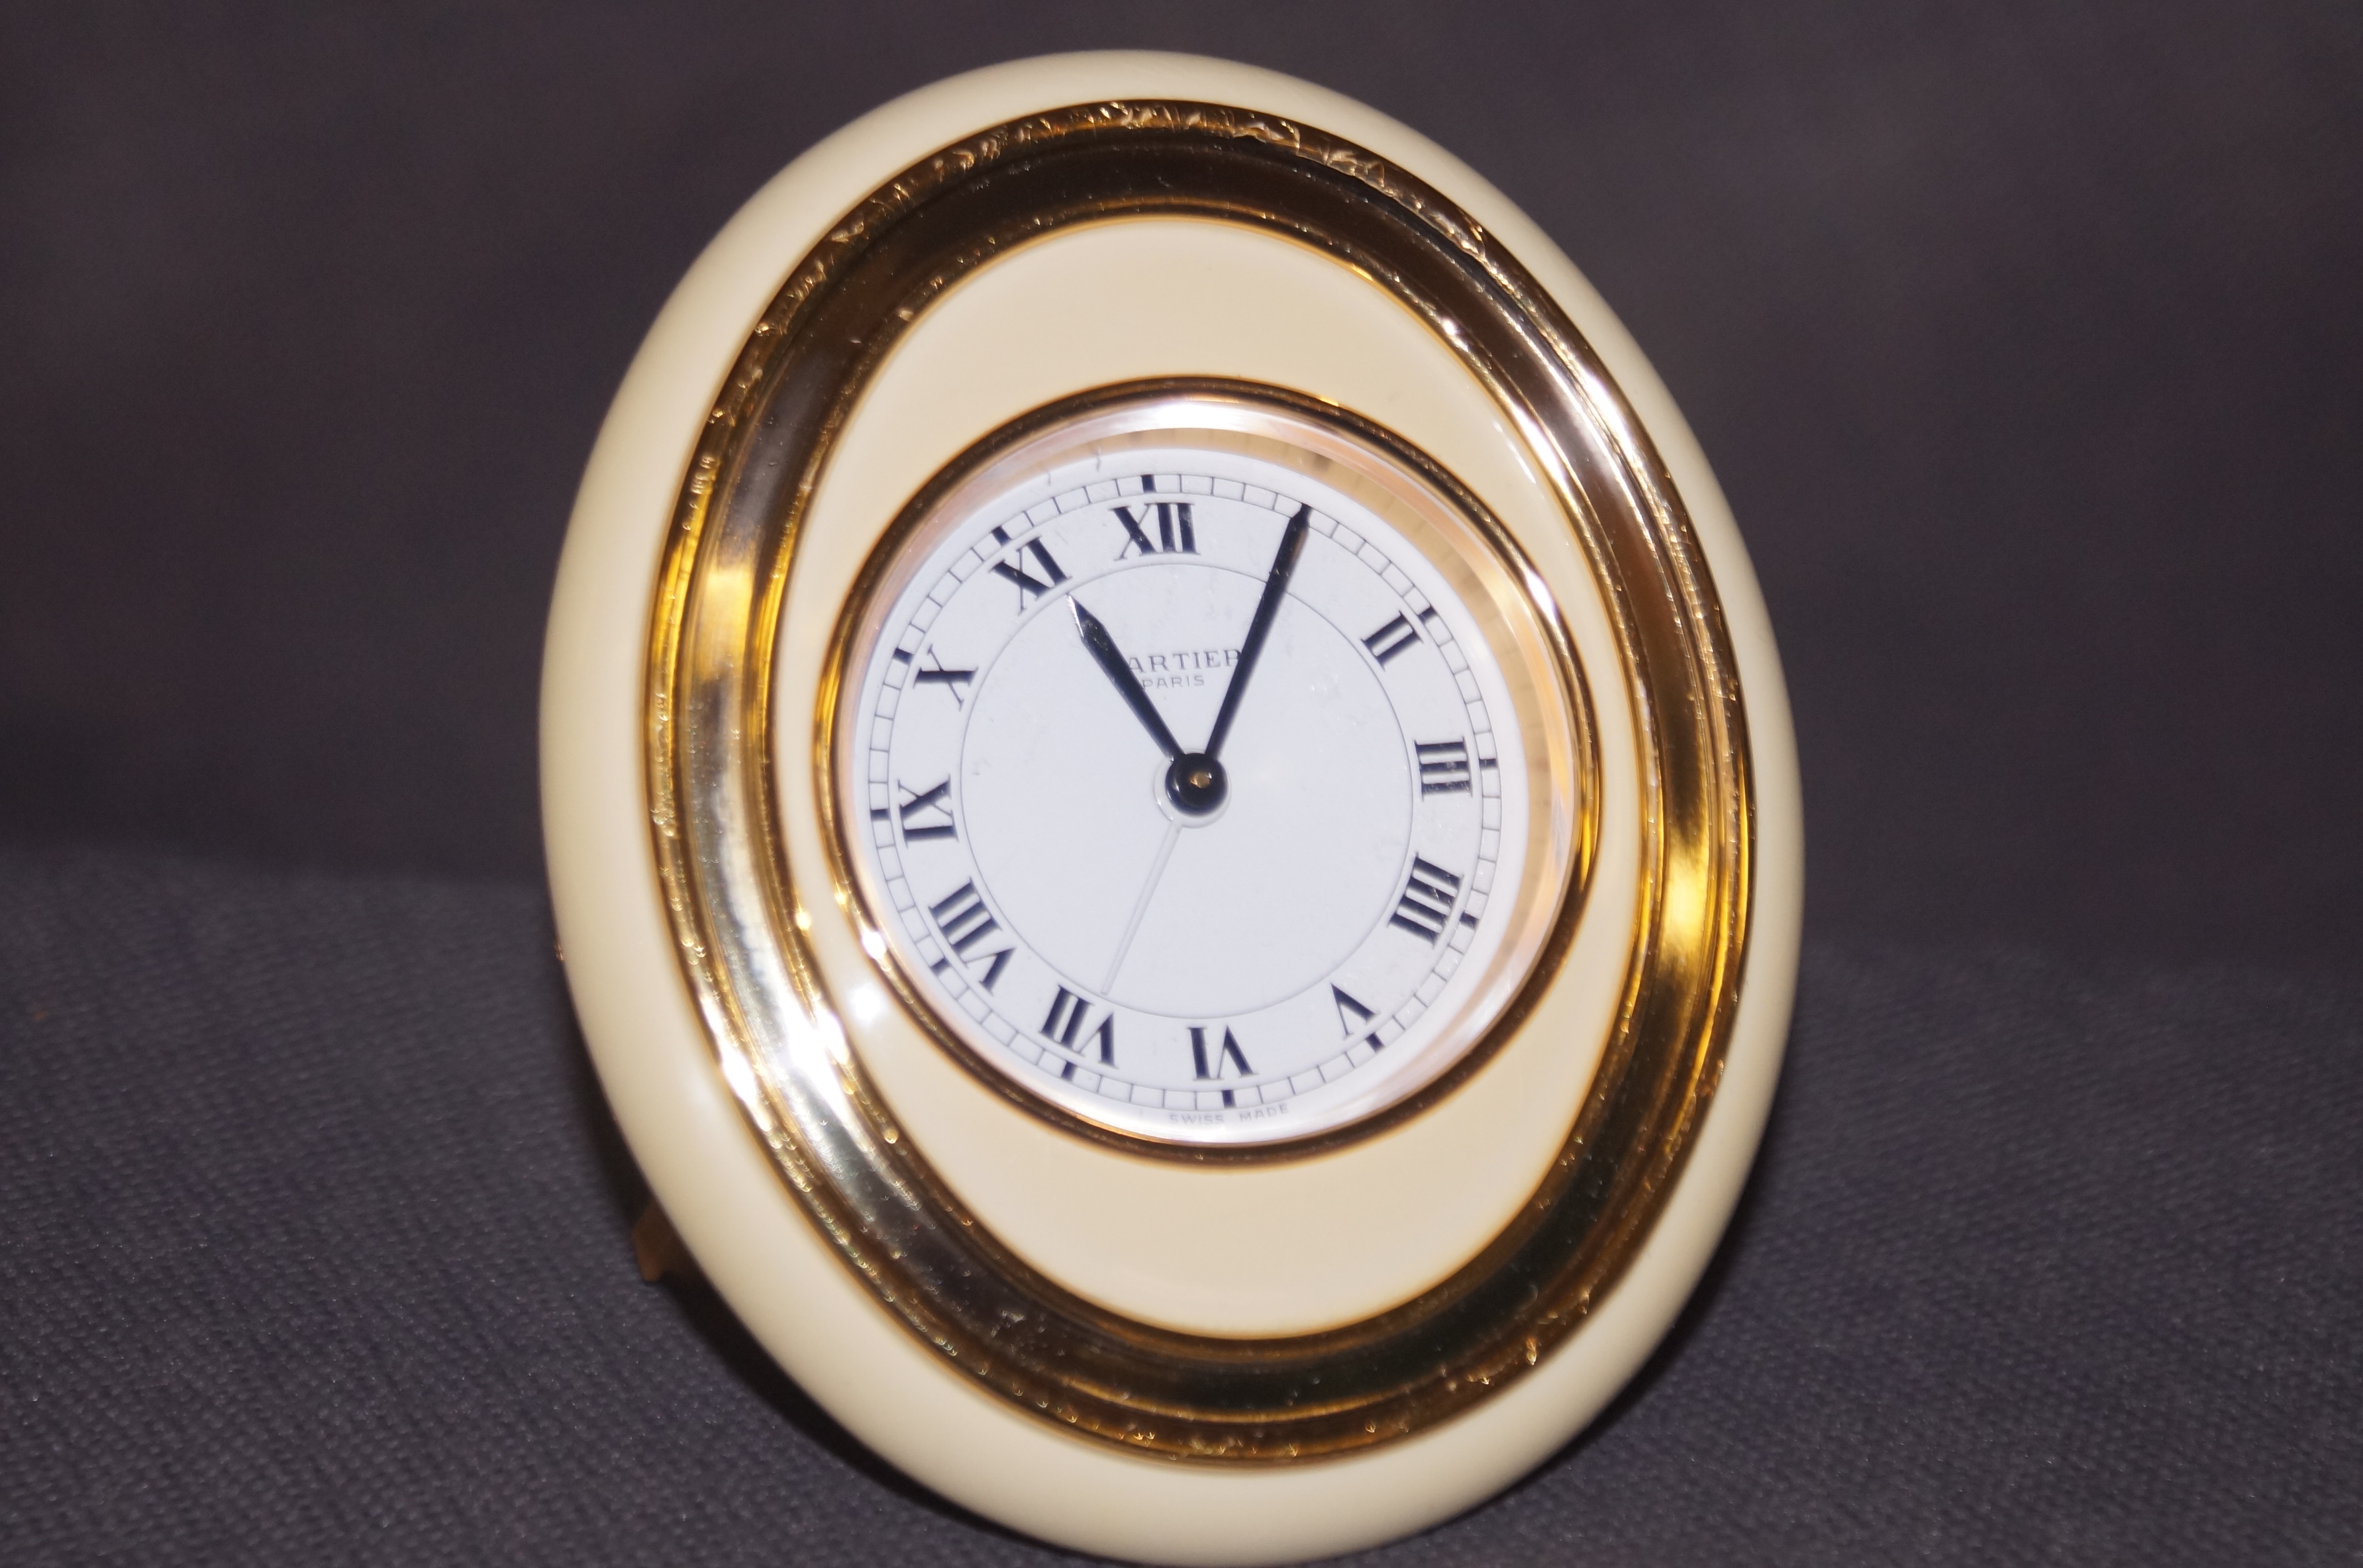 A Les Must De Cartier Paris travel clock numbered - Image 4 of 6